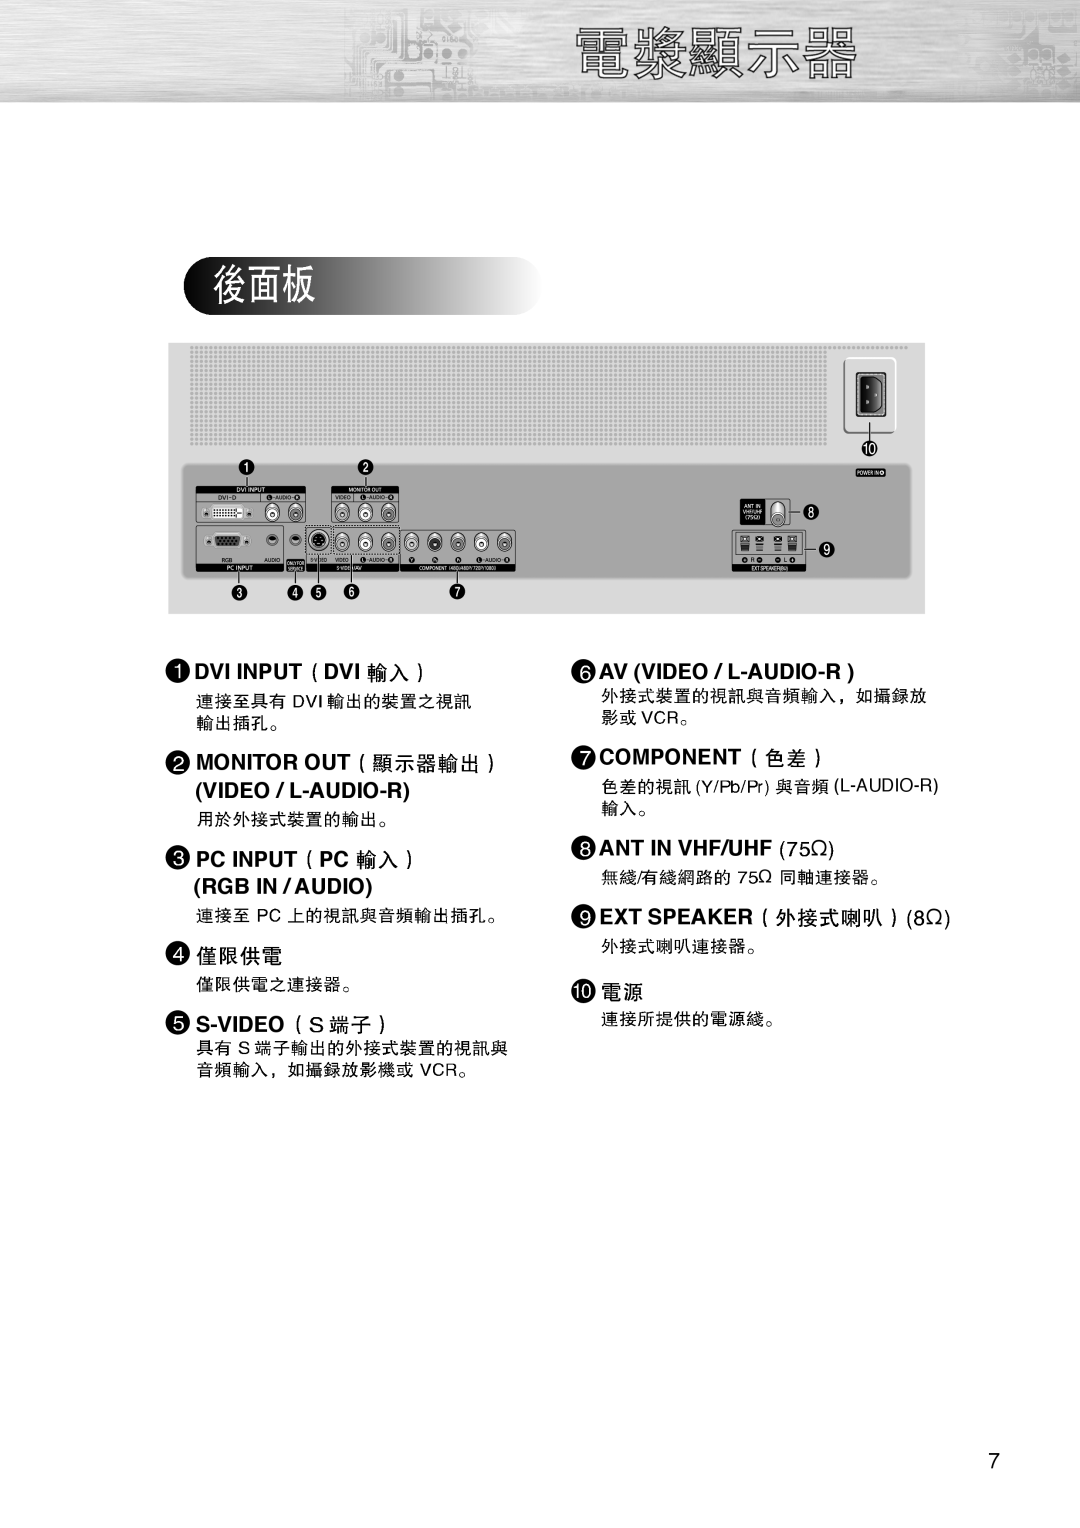 Samsung PL-42D4S manual L-Audio-R 